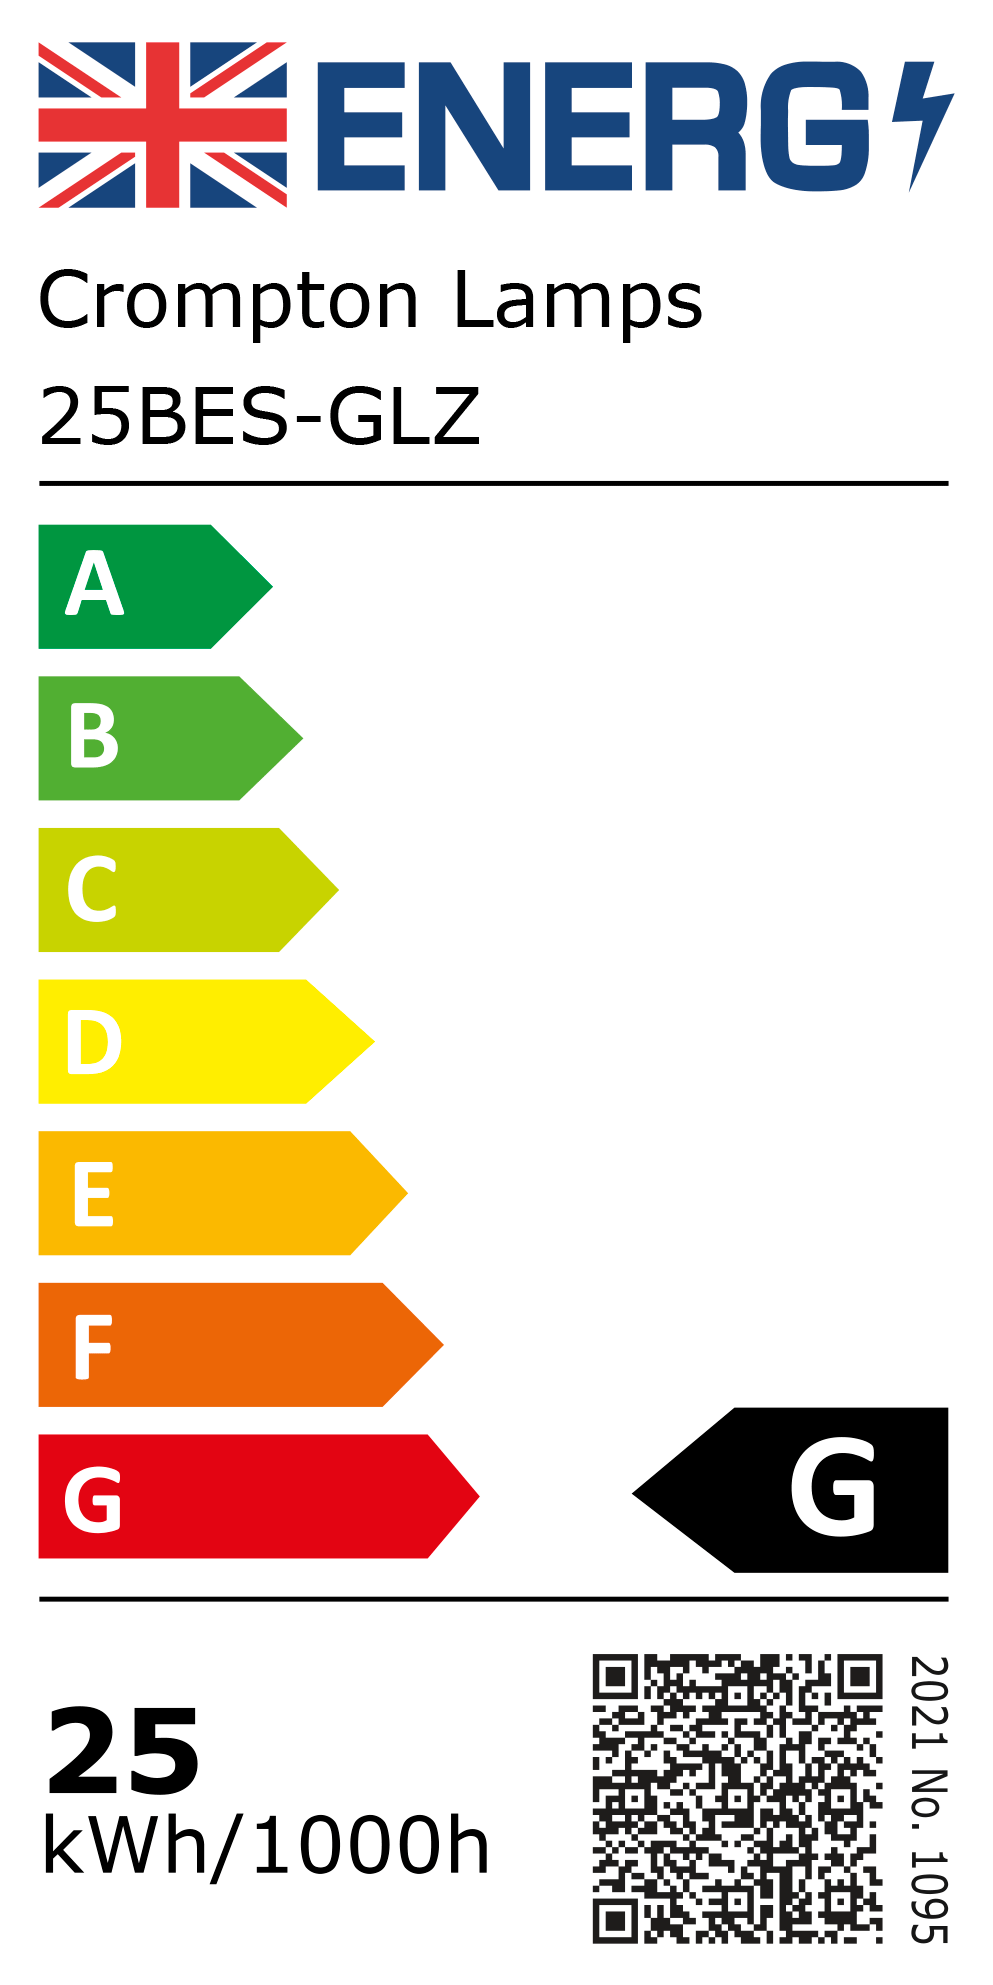 New 2021 Energy Rating Label: Stock Code 25BES-GLZ